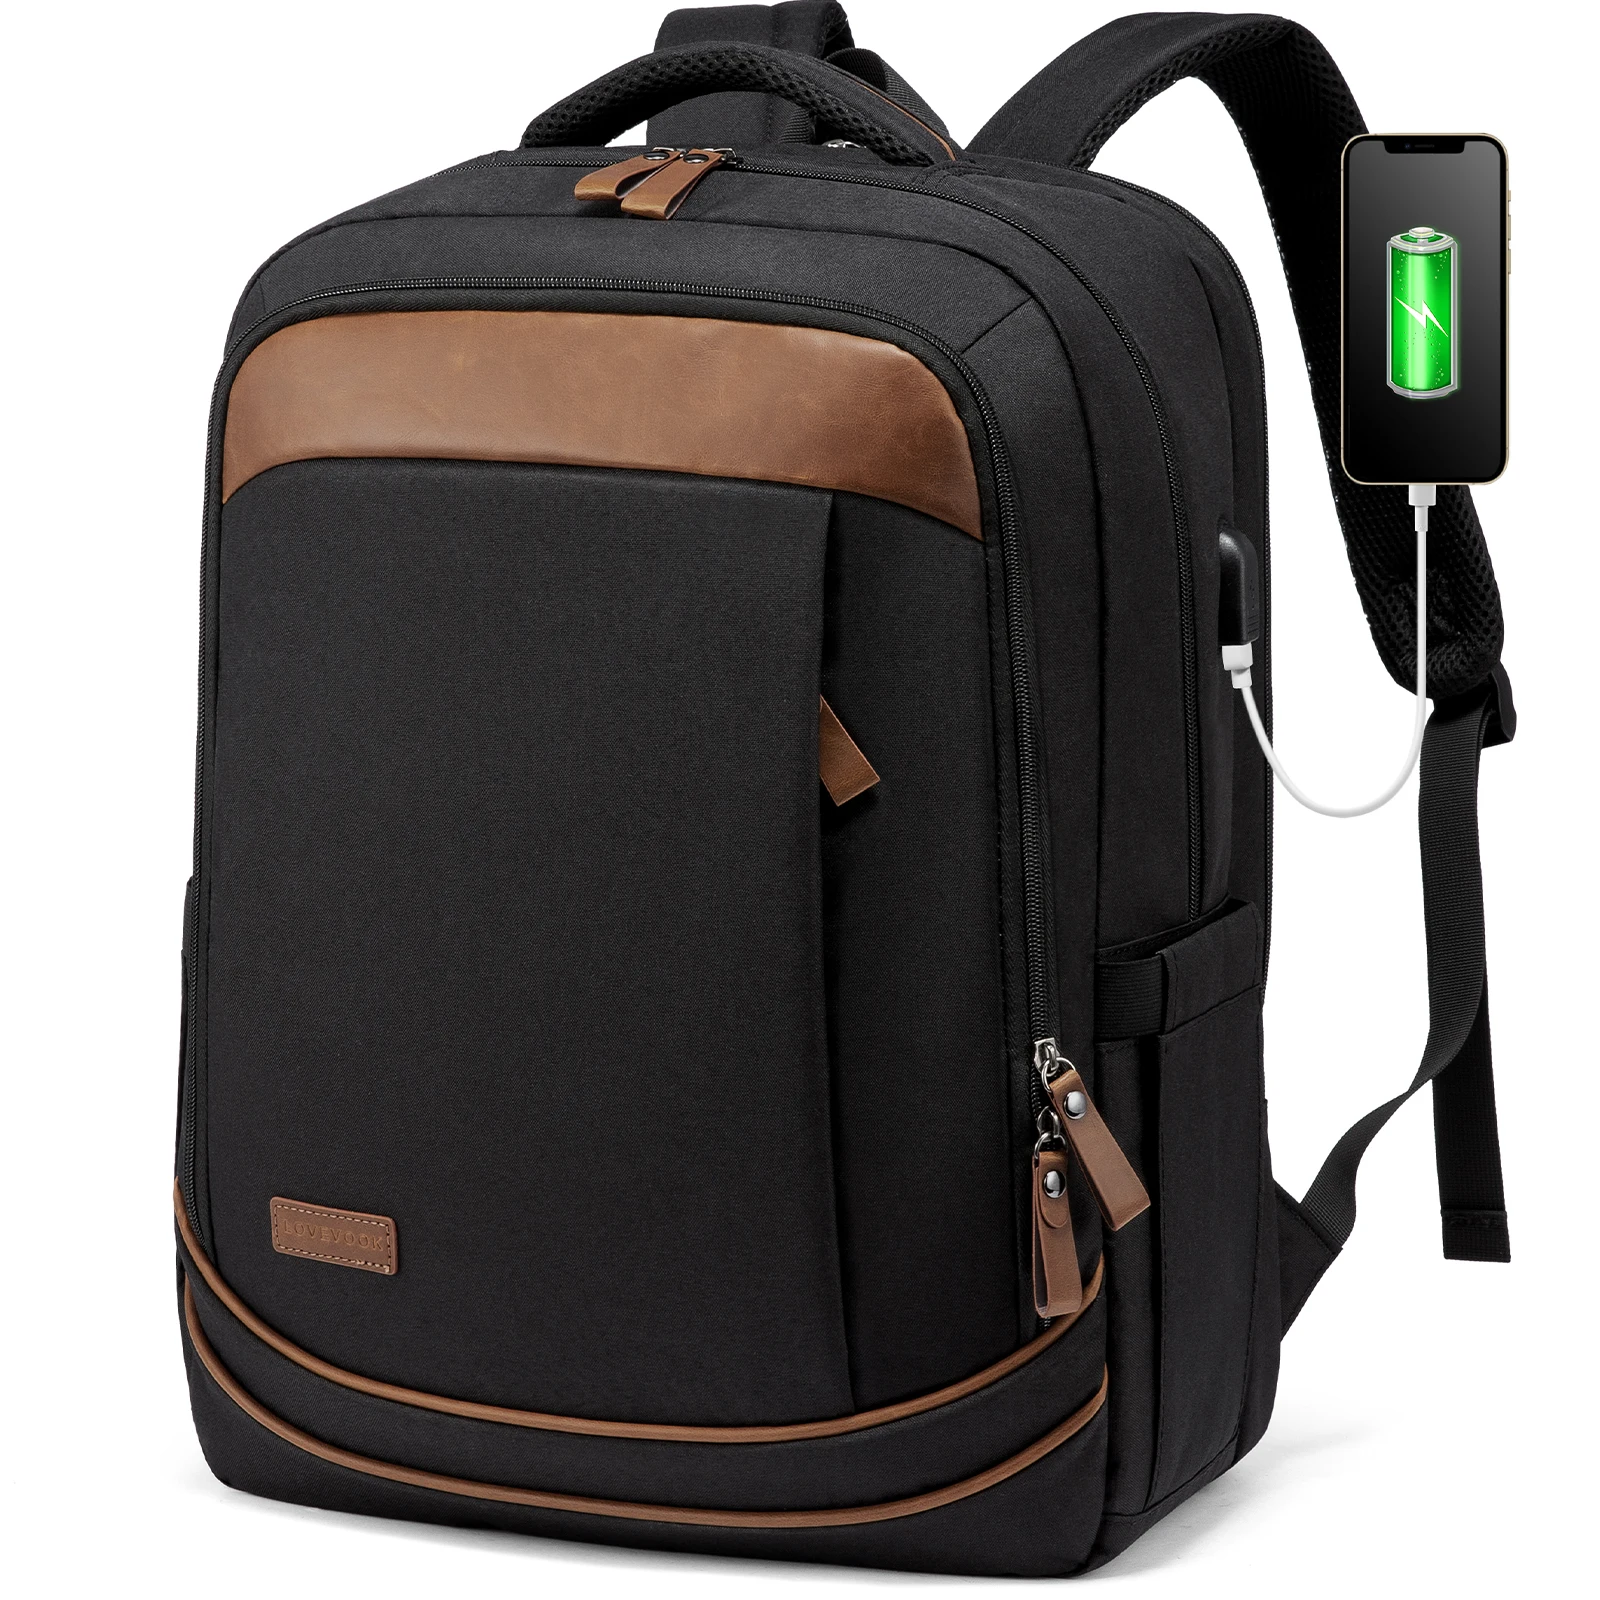 

LOVEVOOK Large Daypack with USB Port School Computer Bag 17 Inch Laptop Business College Bookbag for Men Women Travel Backpack